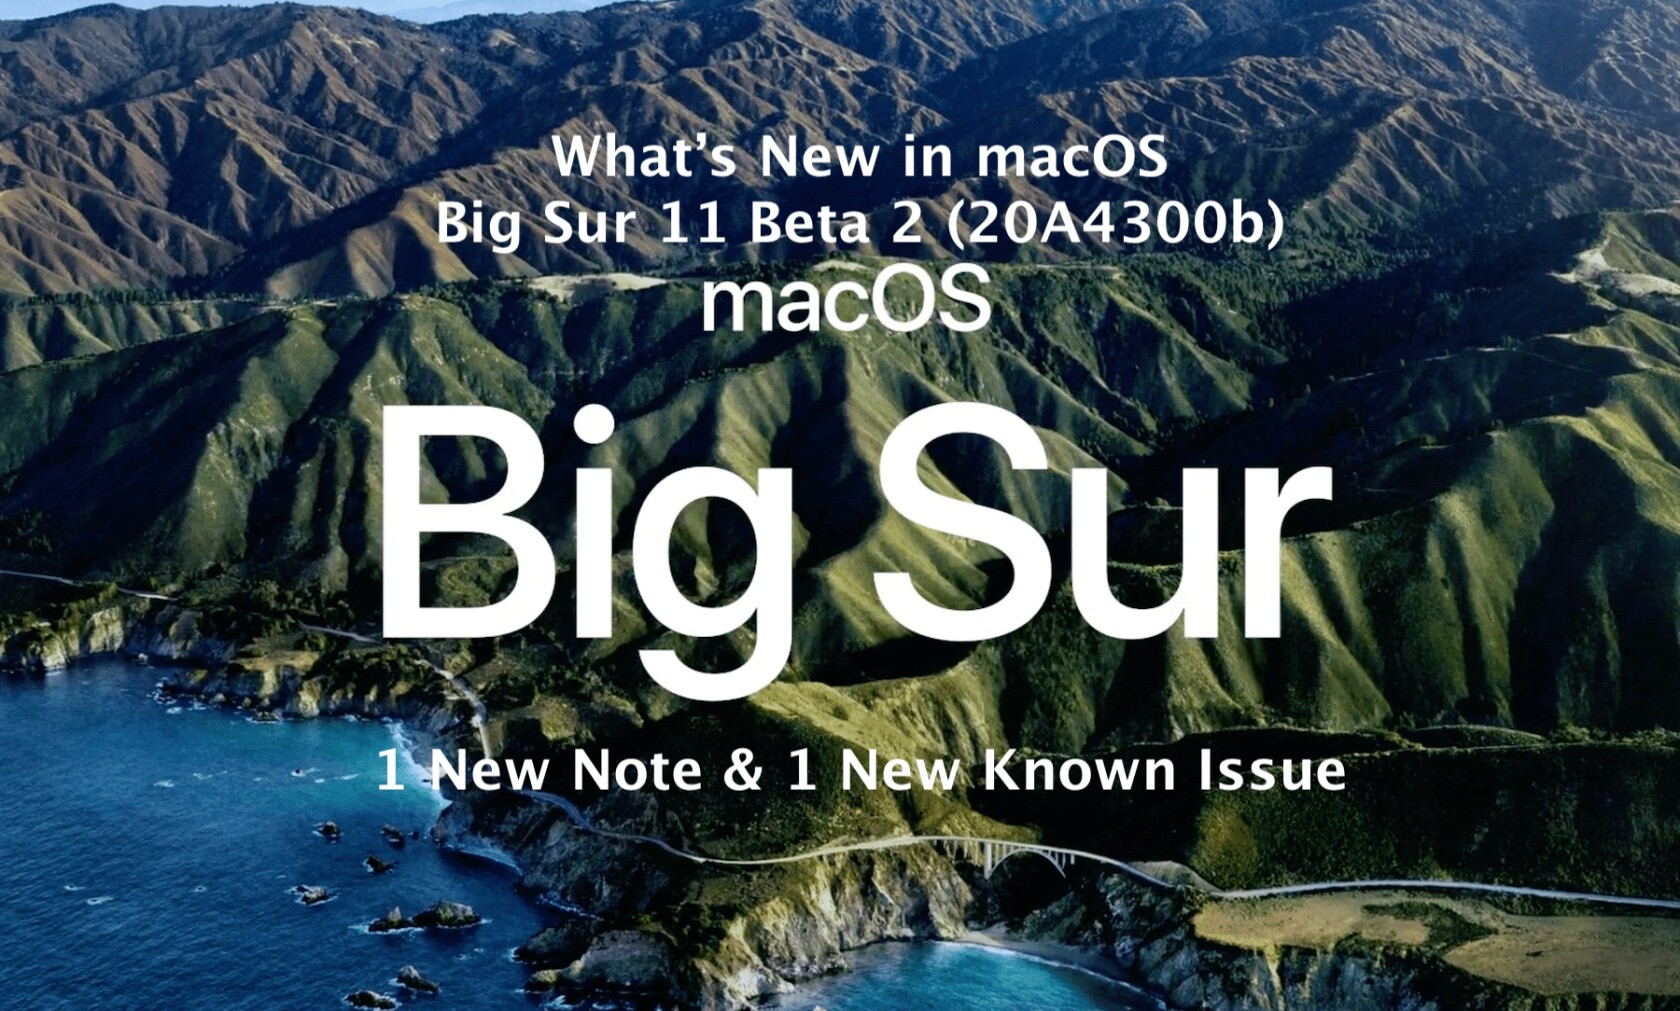 macOS Big Sur11 Beta 2 已经发布，赶快来看看有什么新增功能吧！